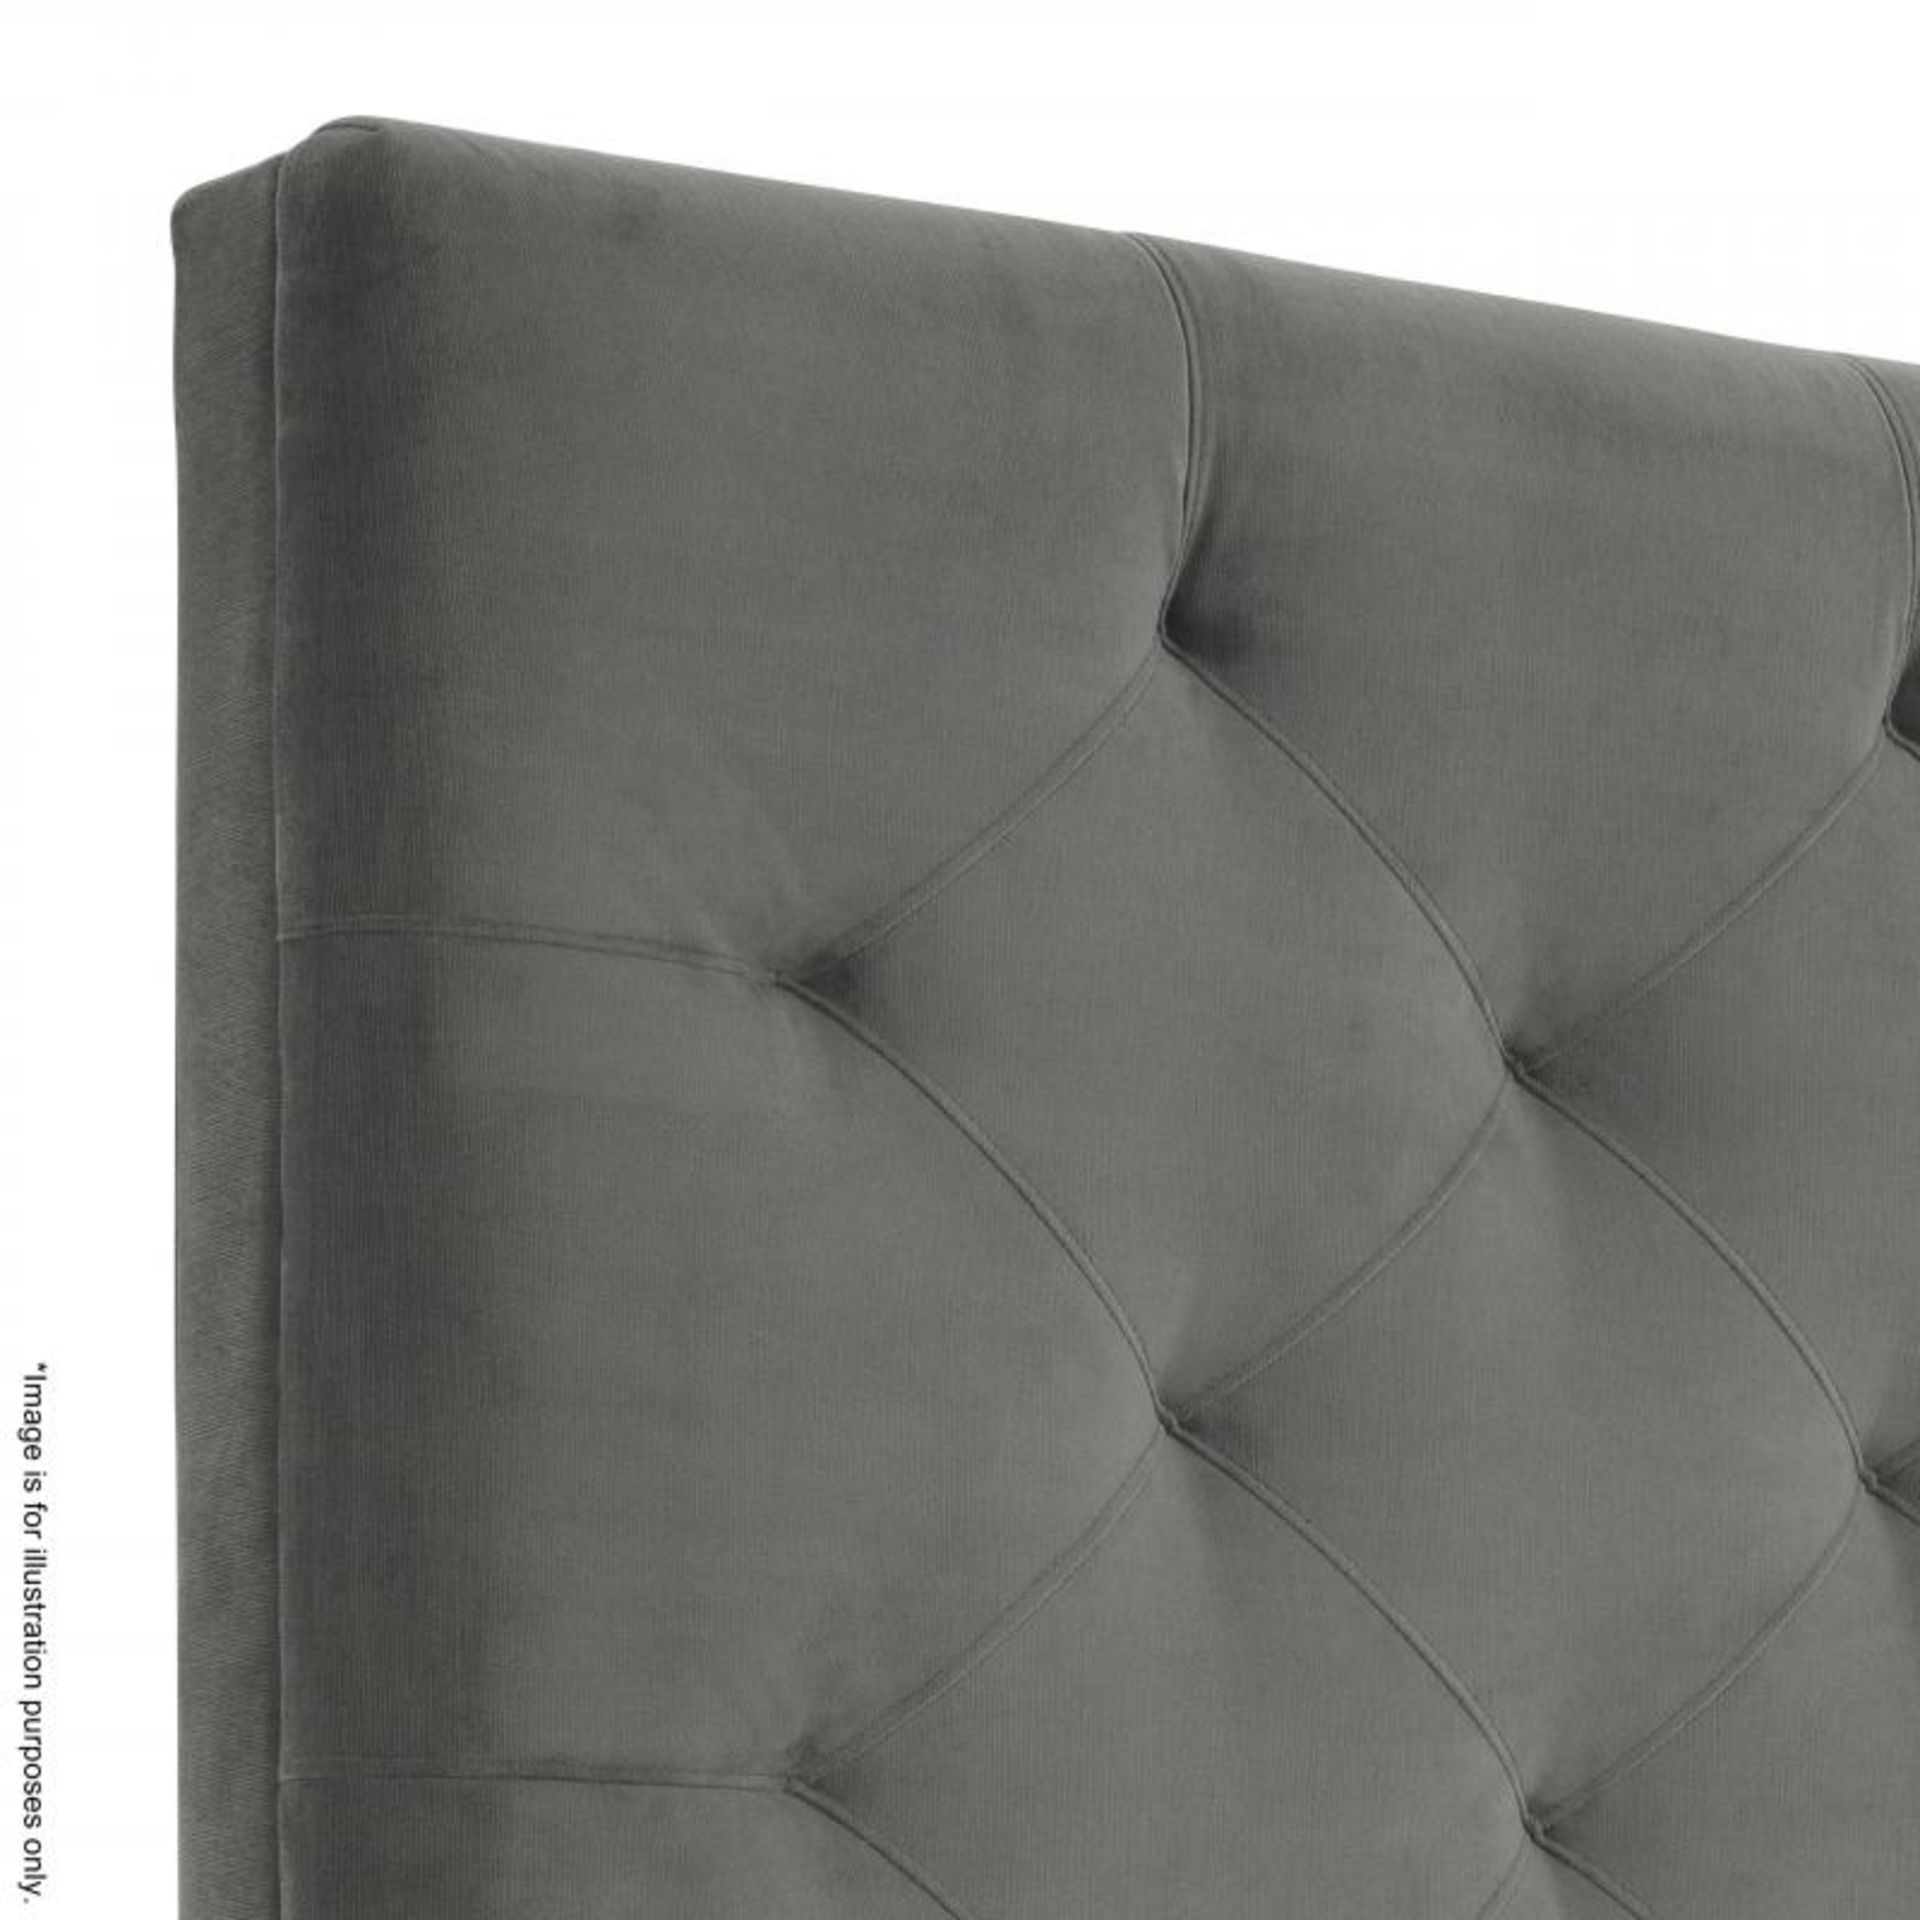 1 x Eichholtz 'Cesare ' Chesterfield-Inspired Upholstered Headboard In A Granite Grey Velvet - Dime - Image 3 of 10